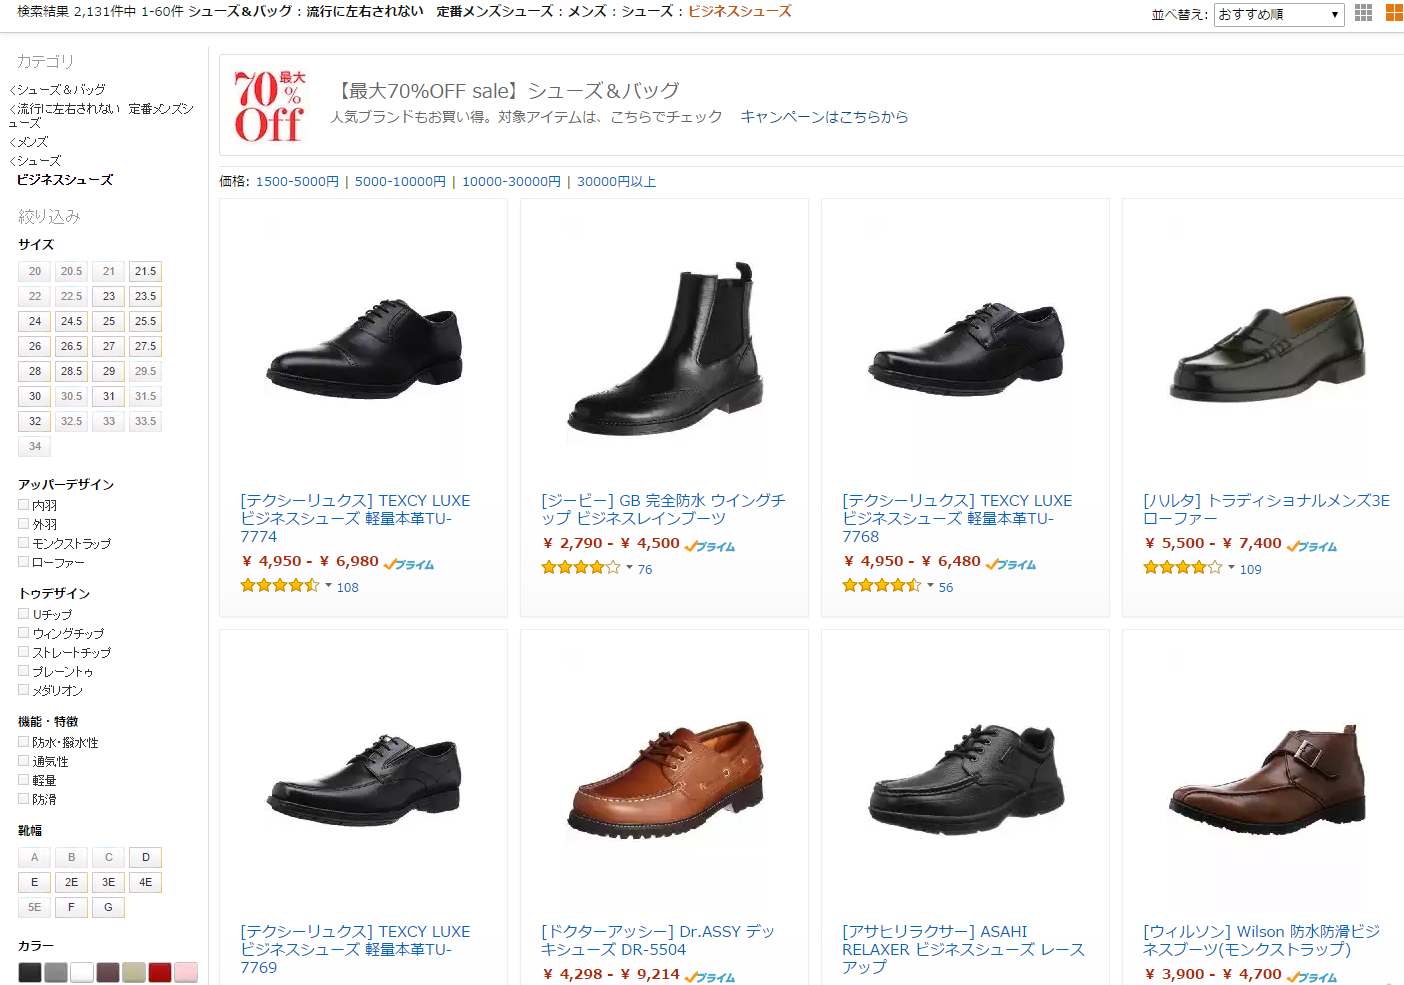 1152-201601_Amazon Shoes Select 02